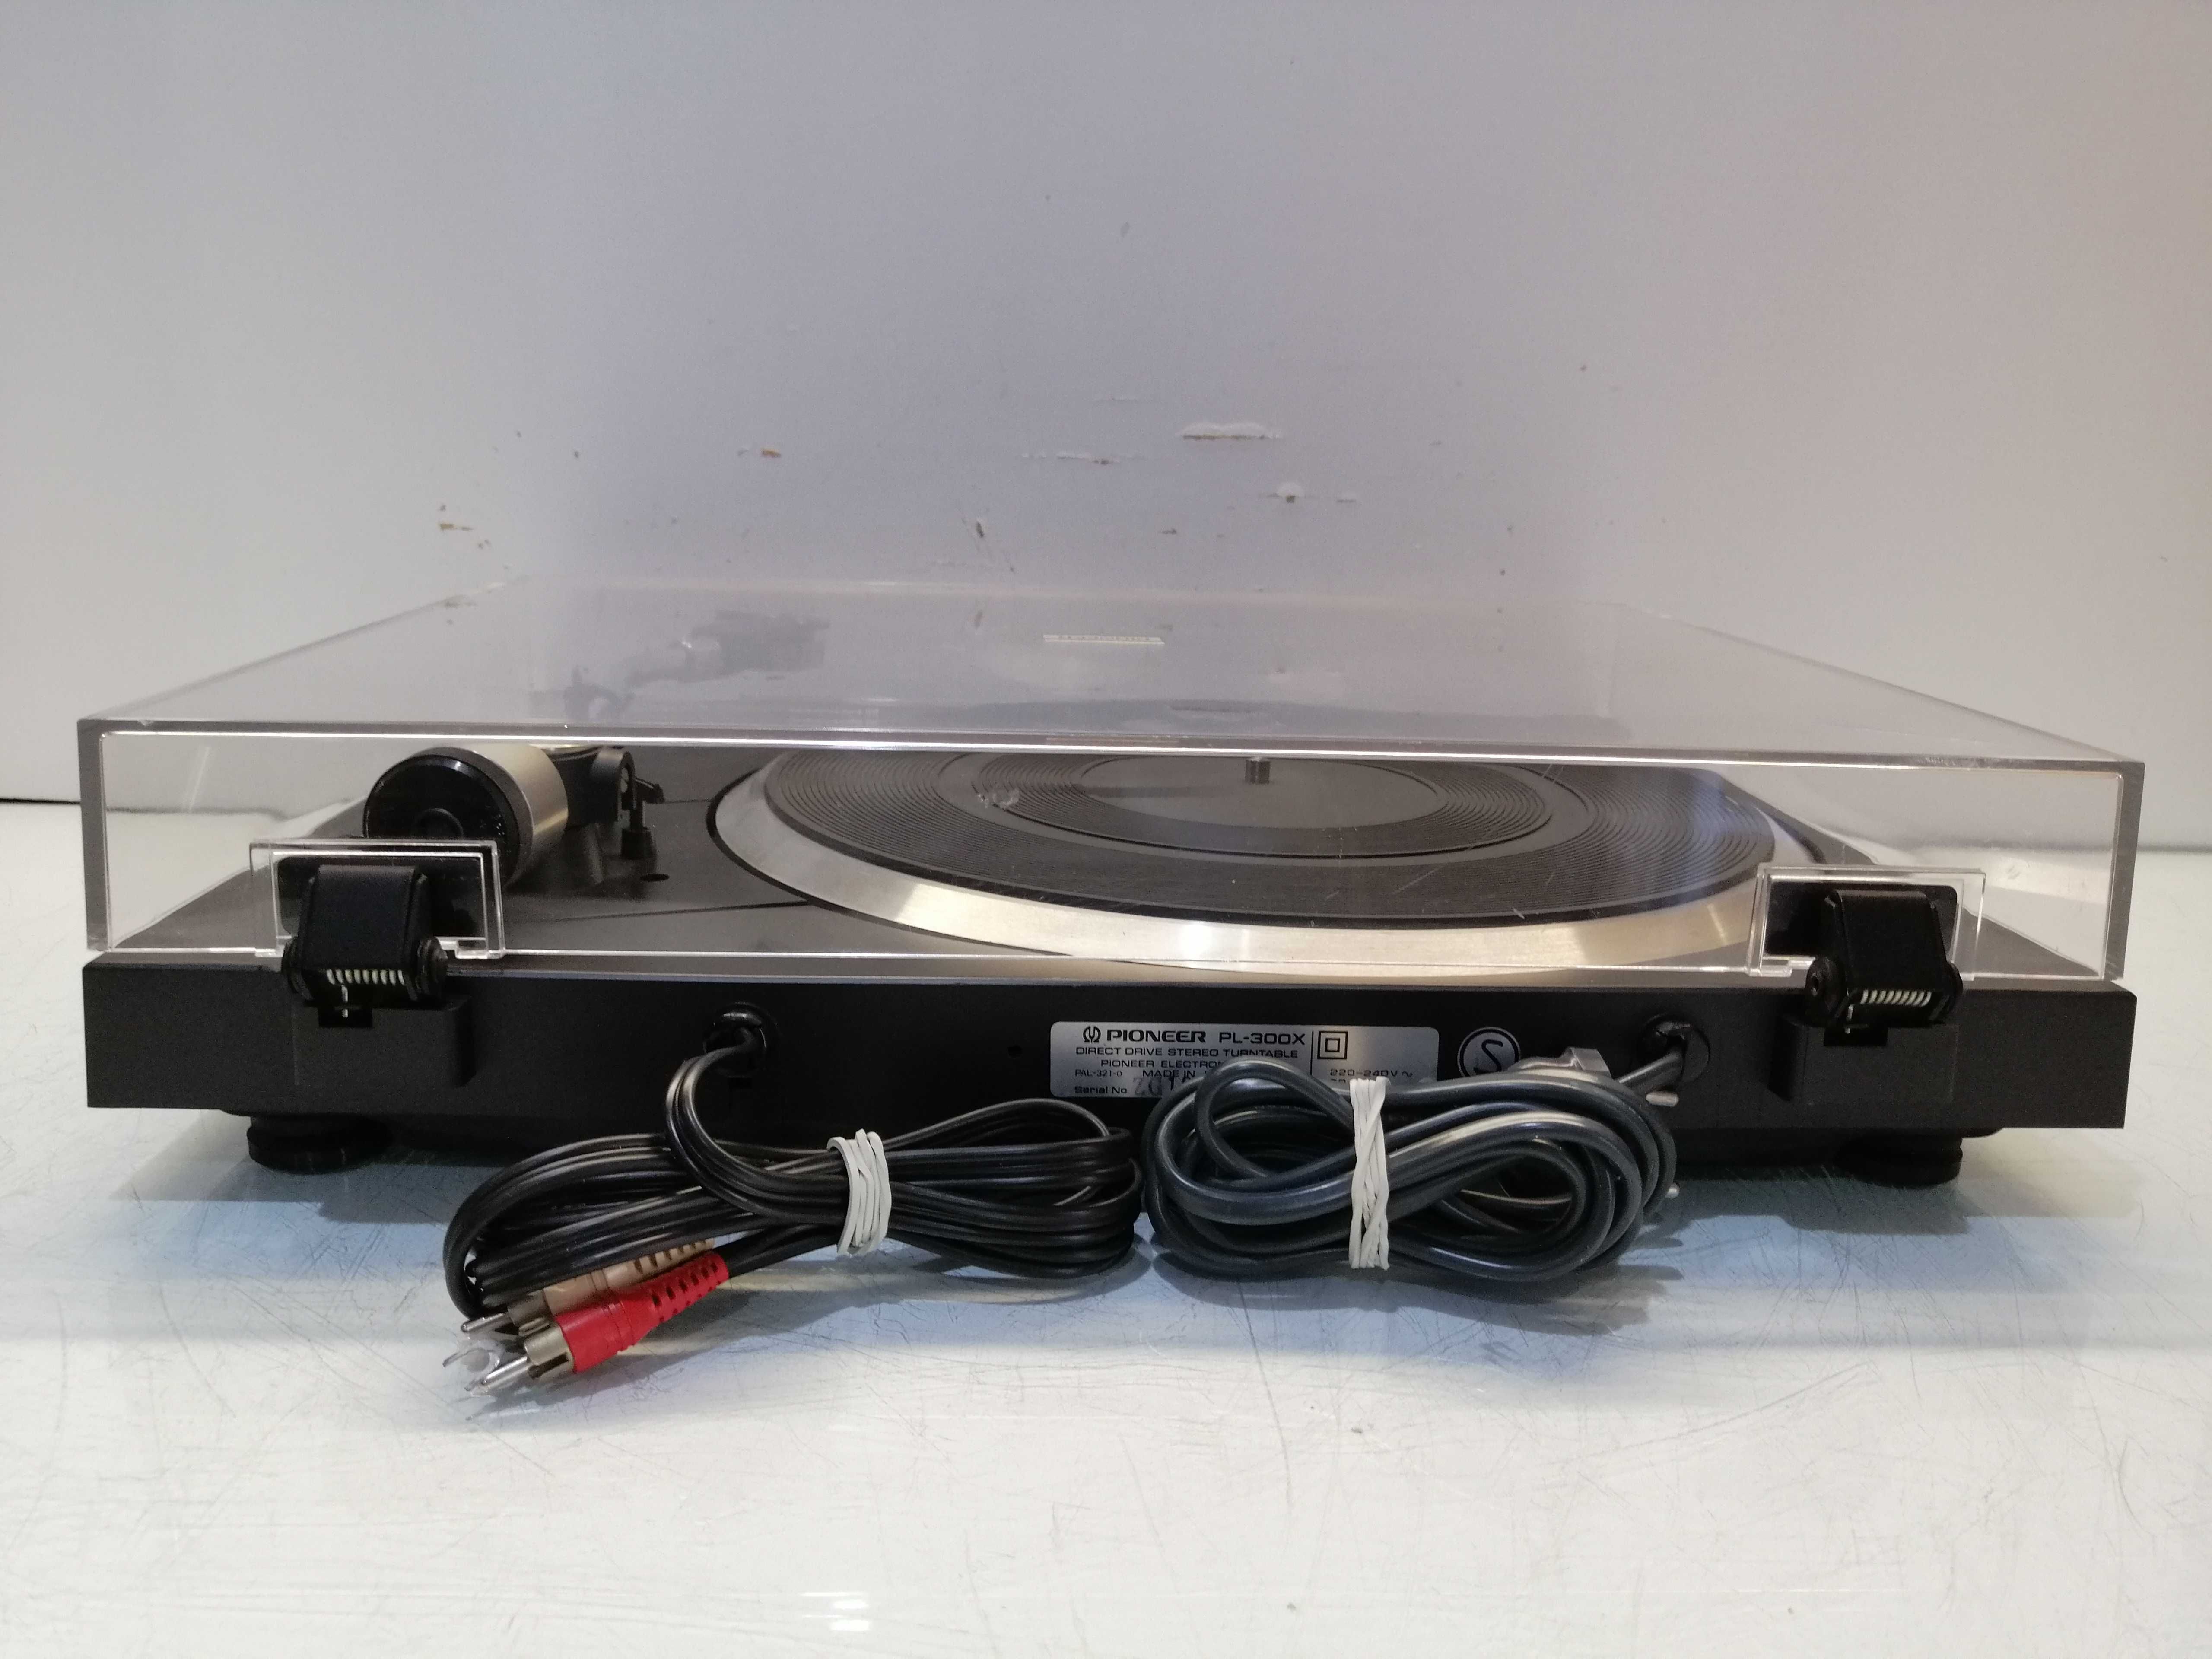 Gramofon Pioneer PL-300X